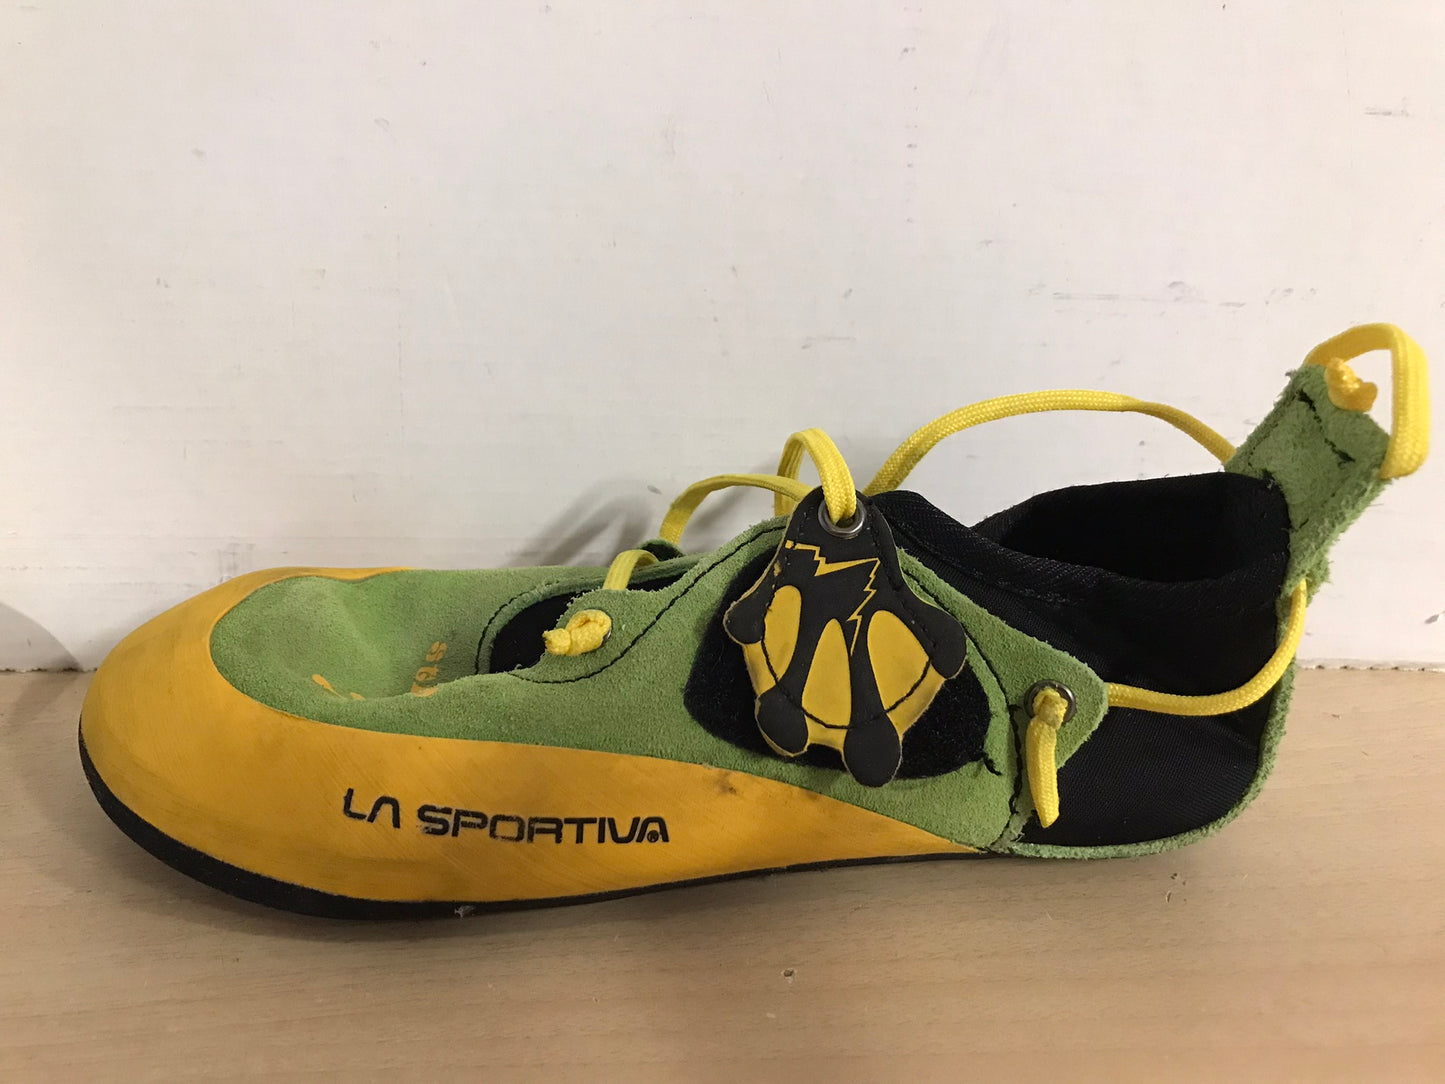 Rock Climbing Shoes Child Size 2-3 La Sportiva Lime and Lemon